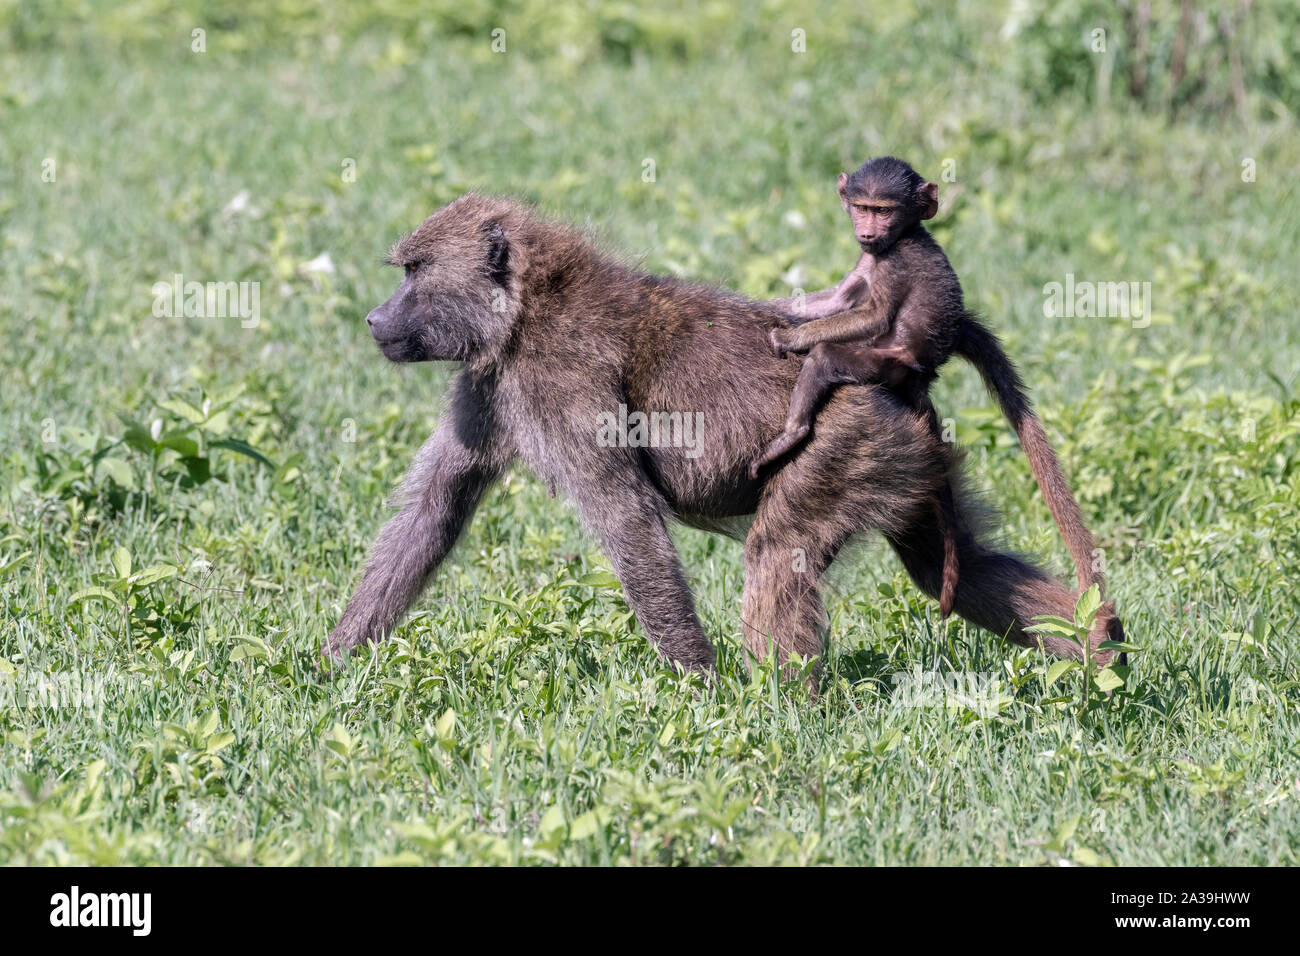 Ride 'em cowboy, a baby olive baboon riding bareback on its mother's back, Ngorongoro Crater, Tanzania Stock Photo